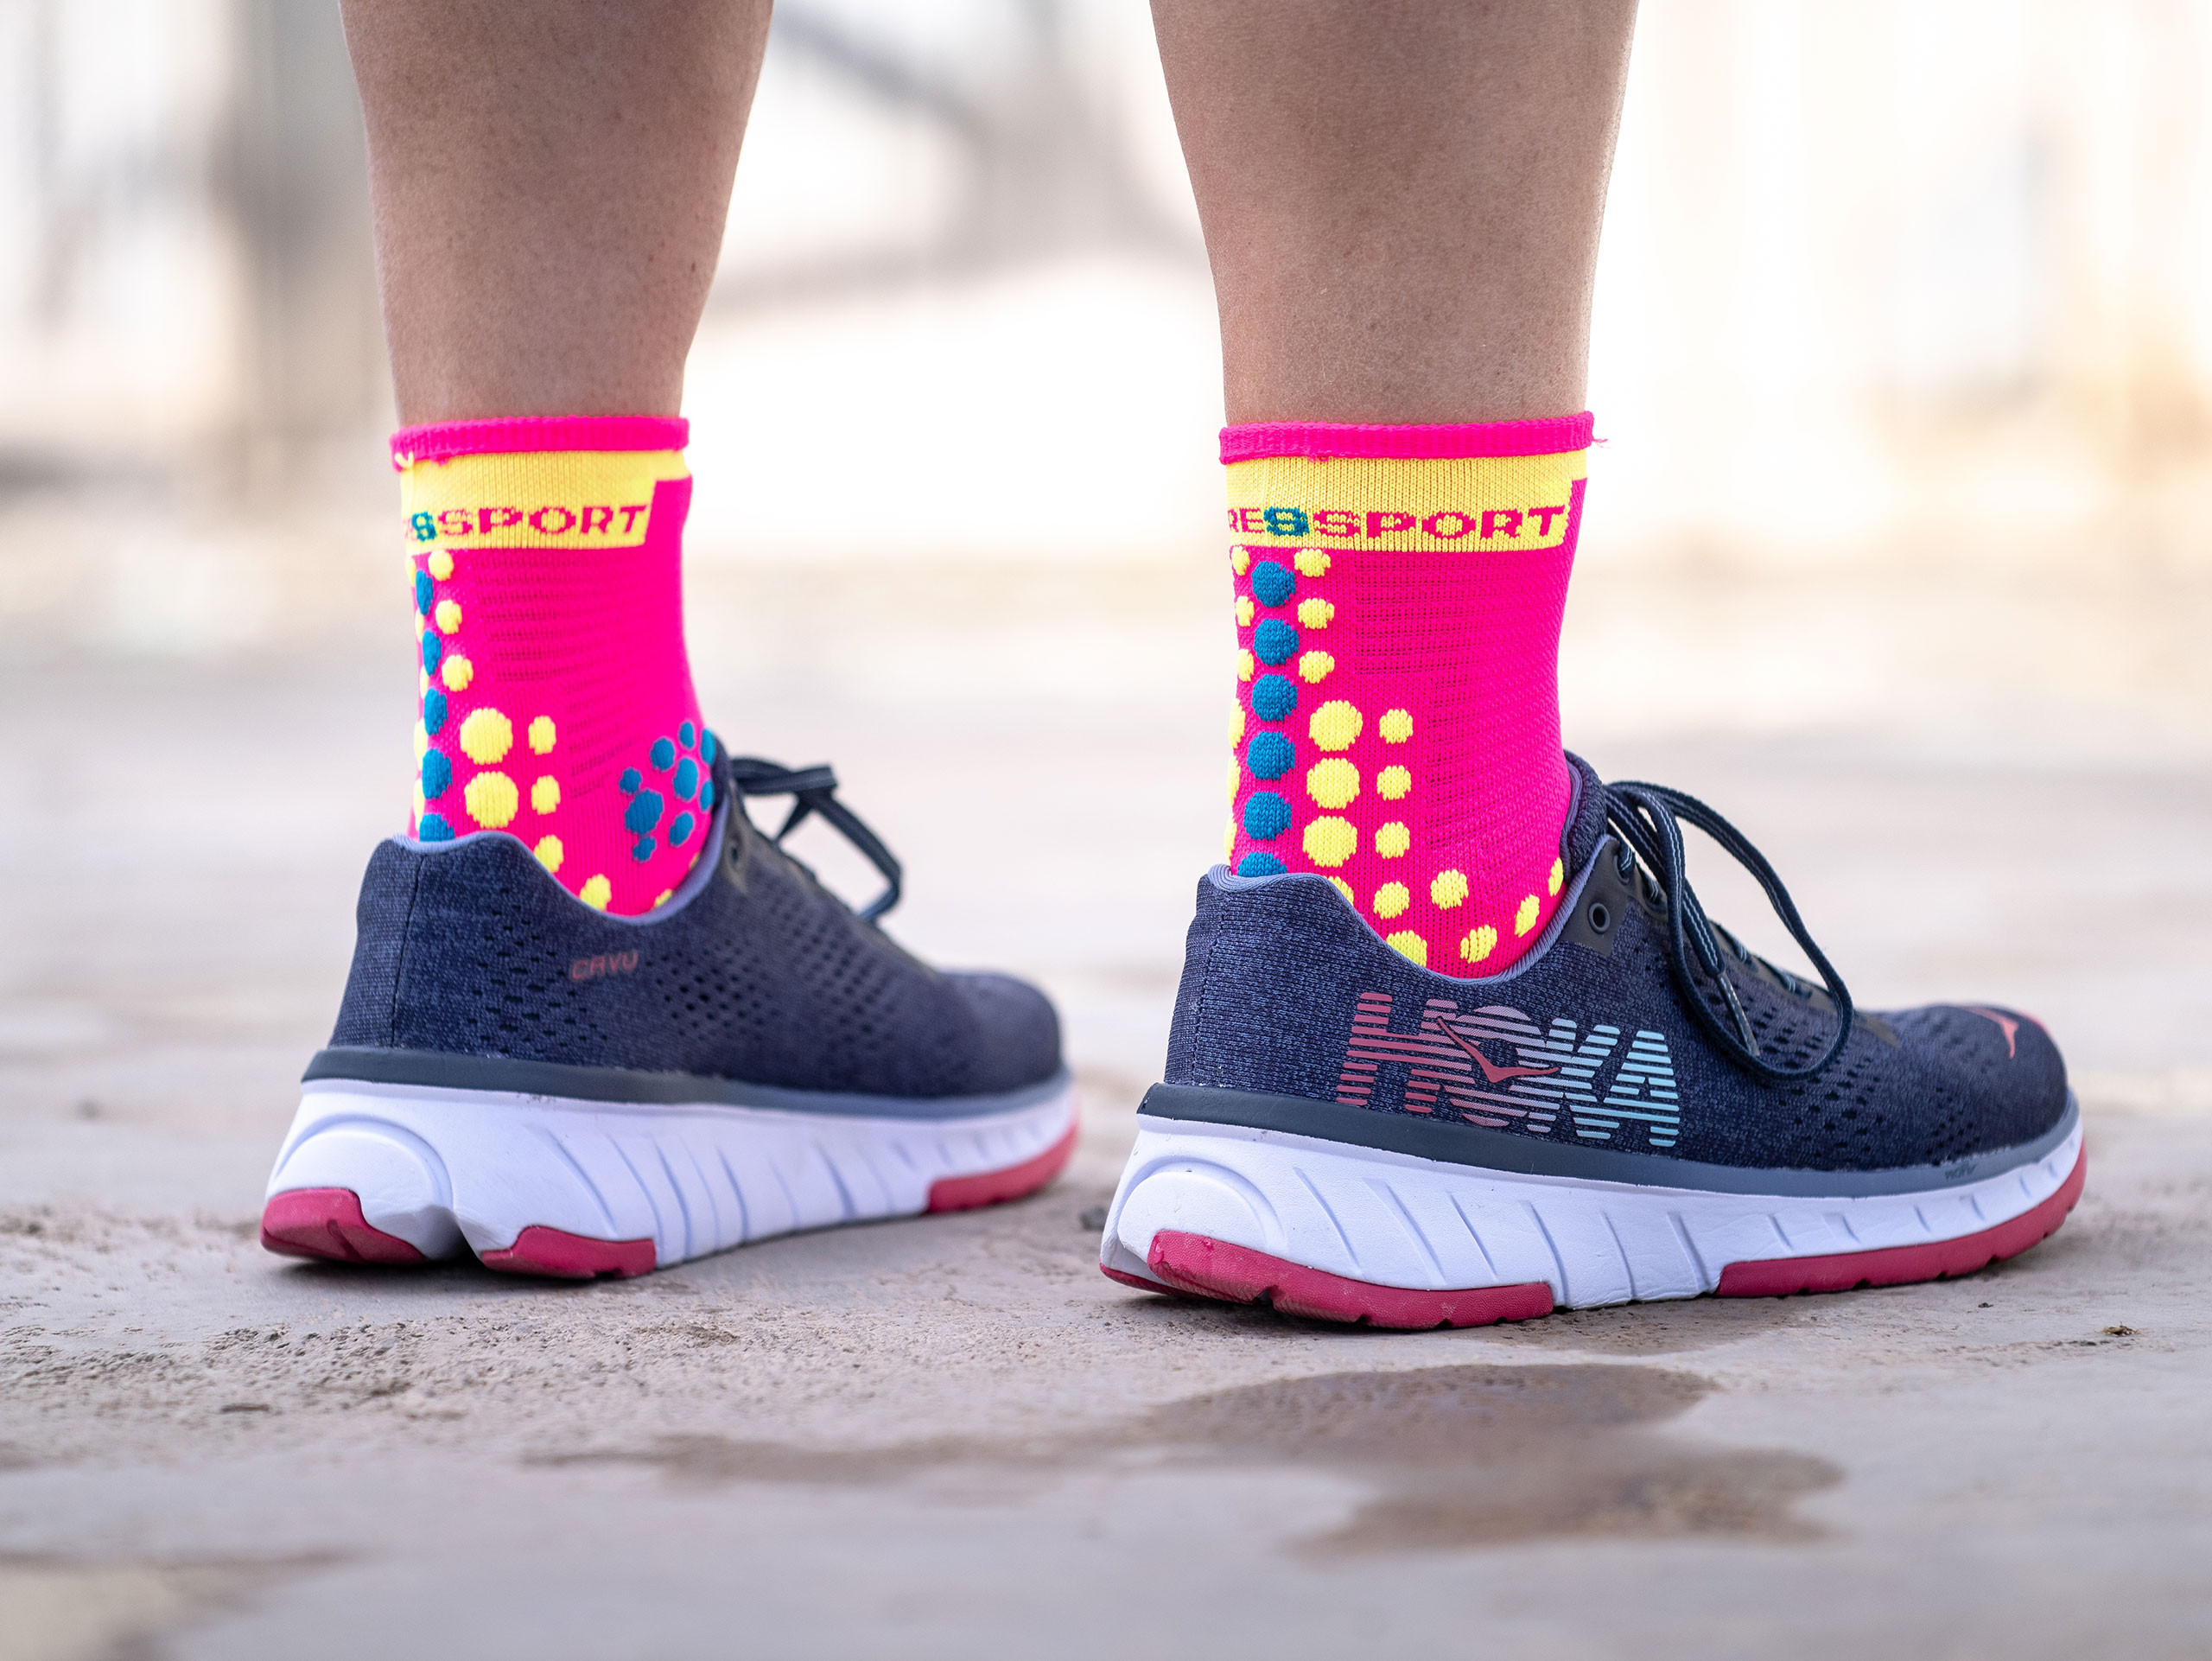 Pro racing socks v3.0 Run high fluo pink